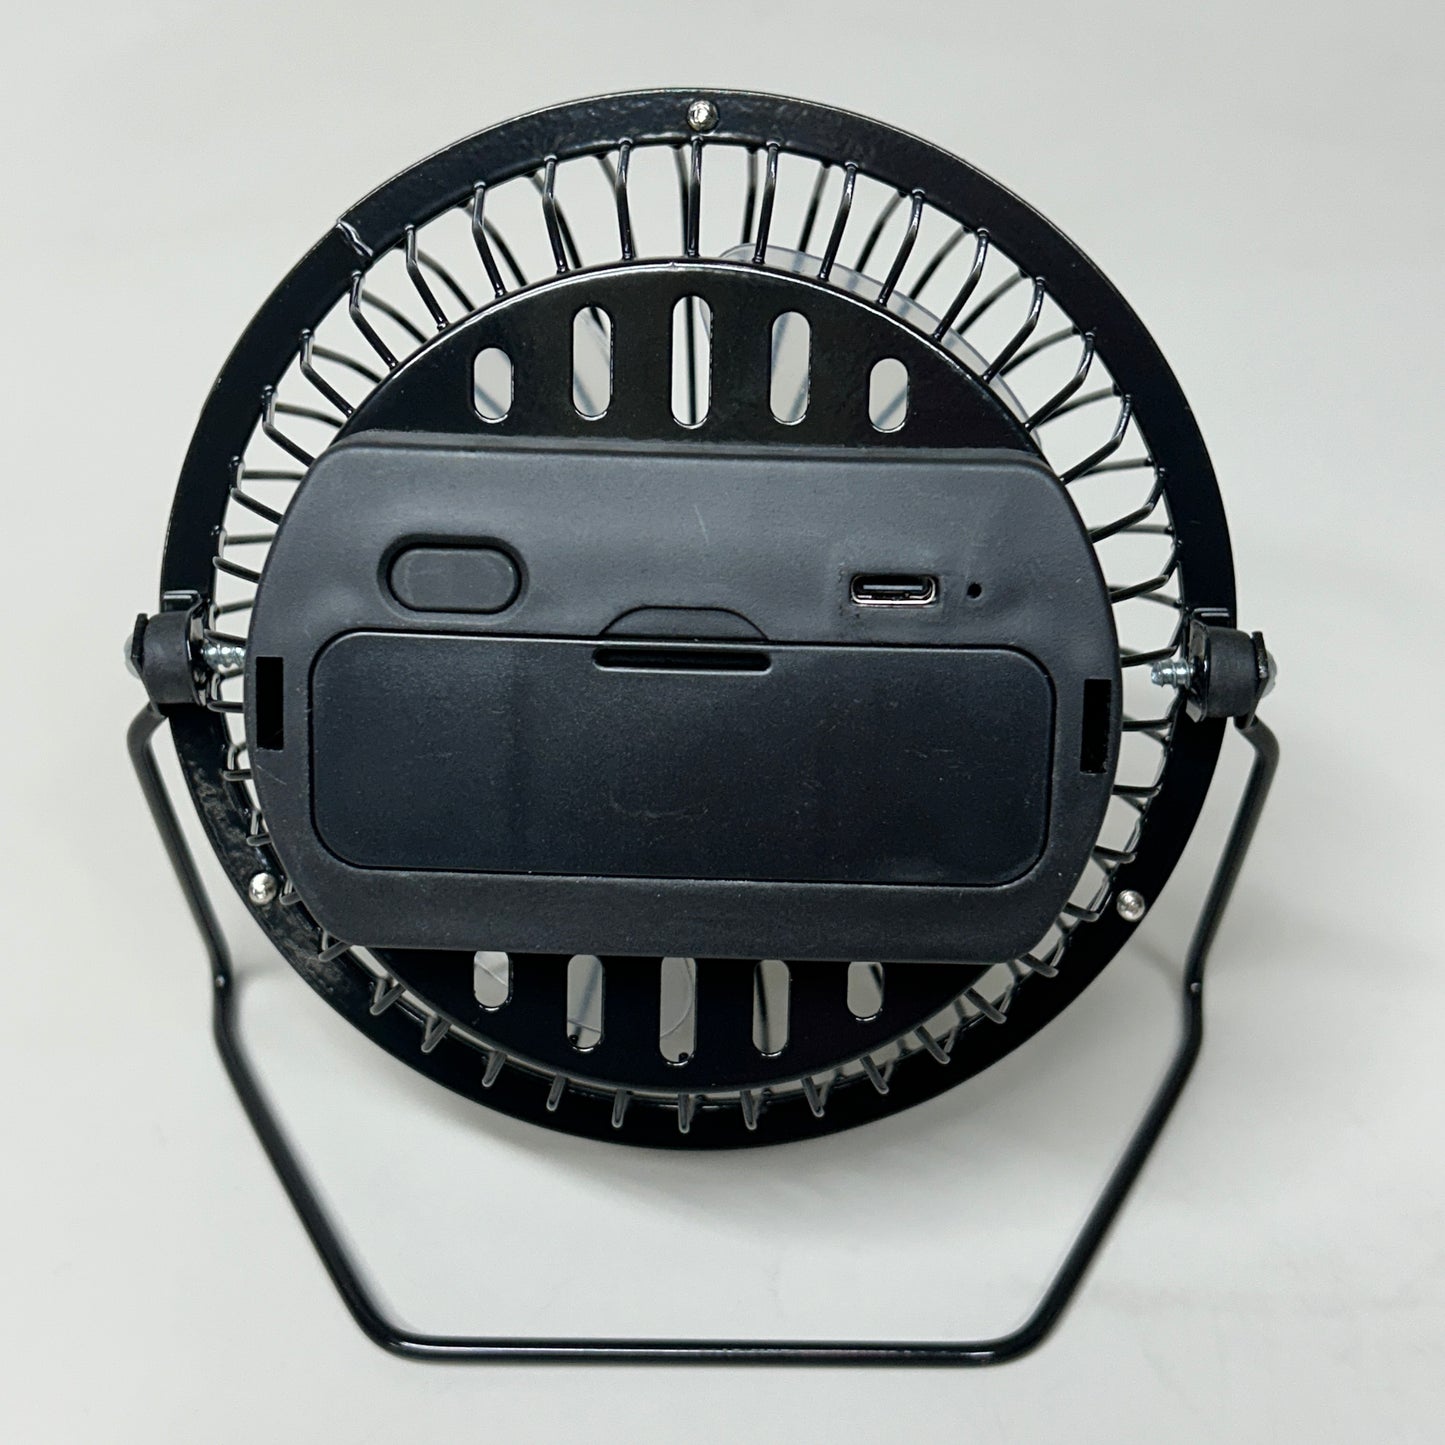 DAVE & BUSTER'S USB Mini Desk Fan 19643 (New)